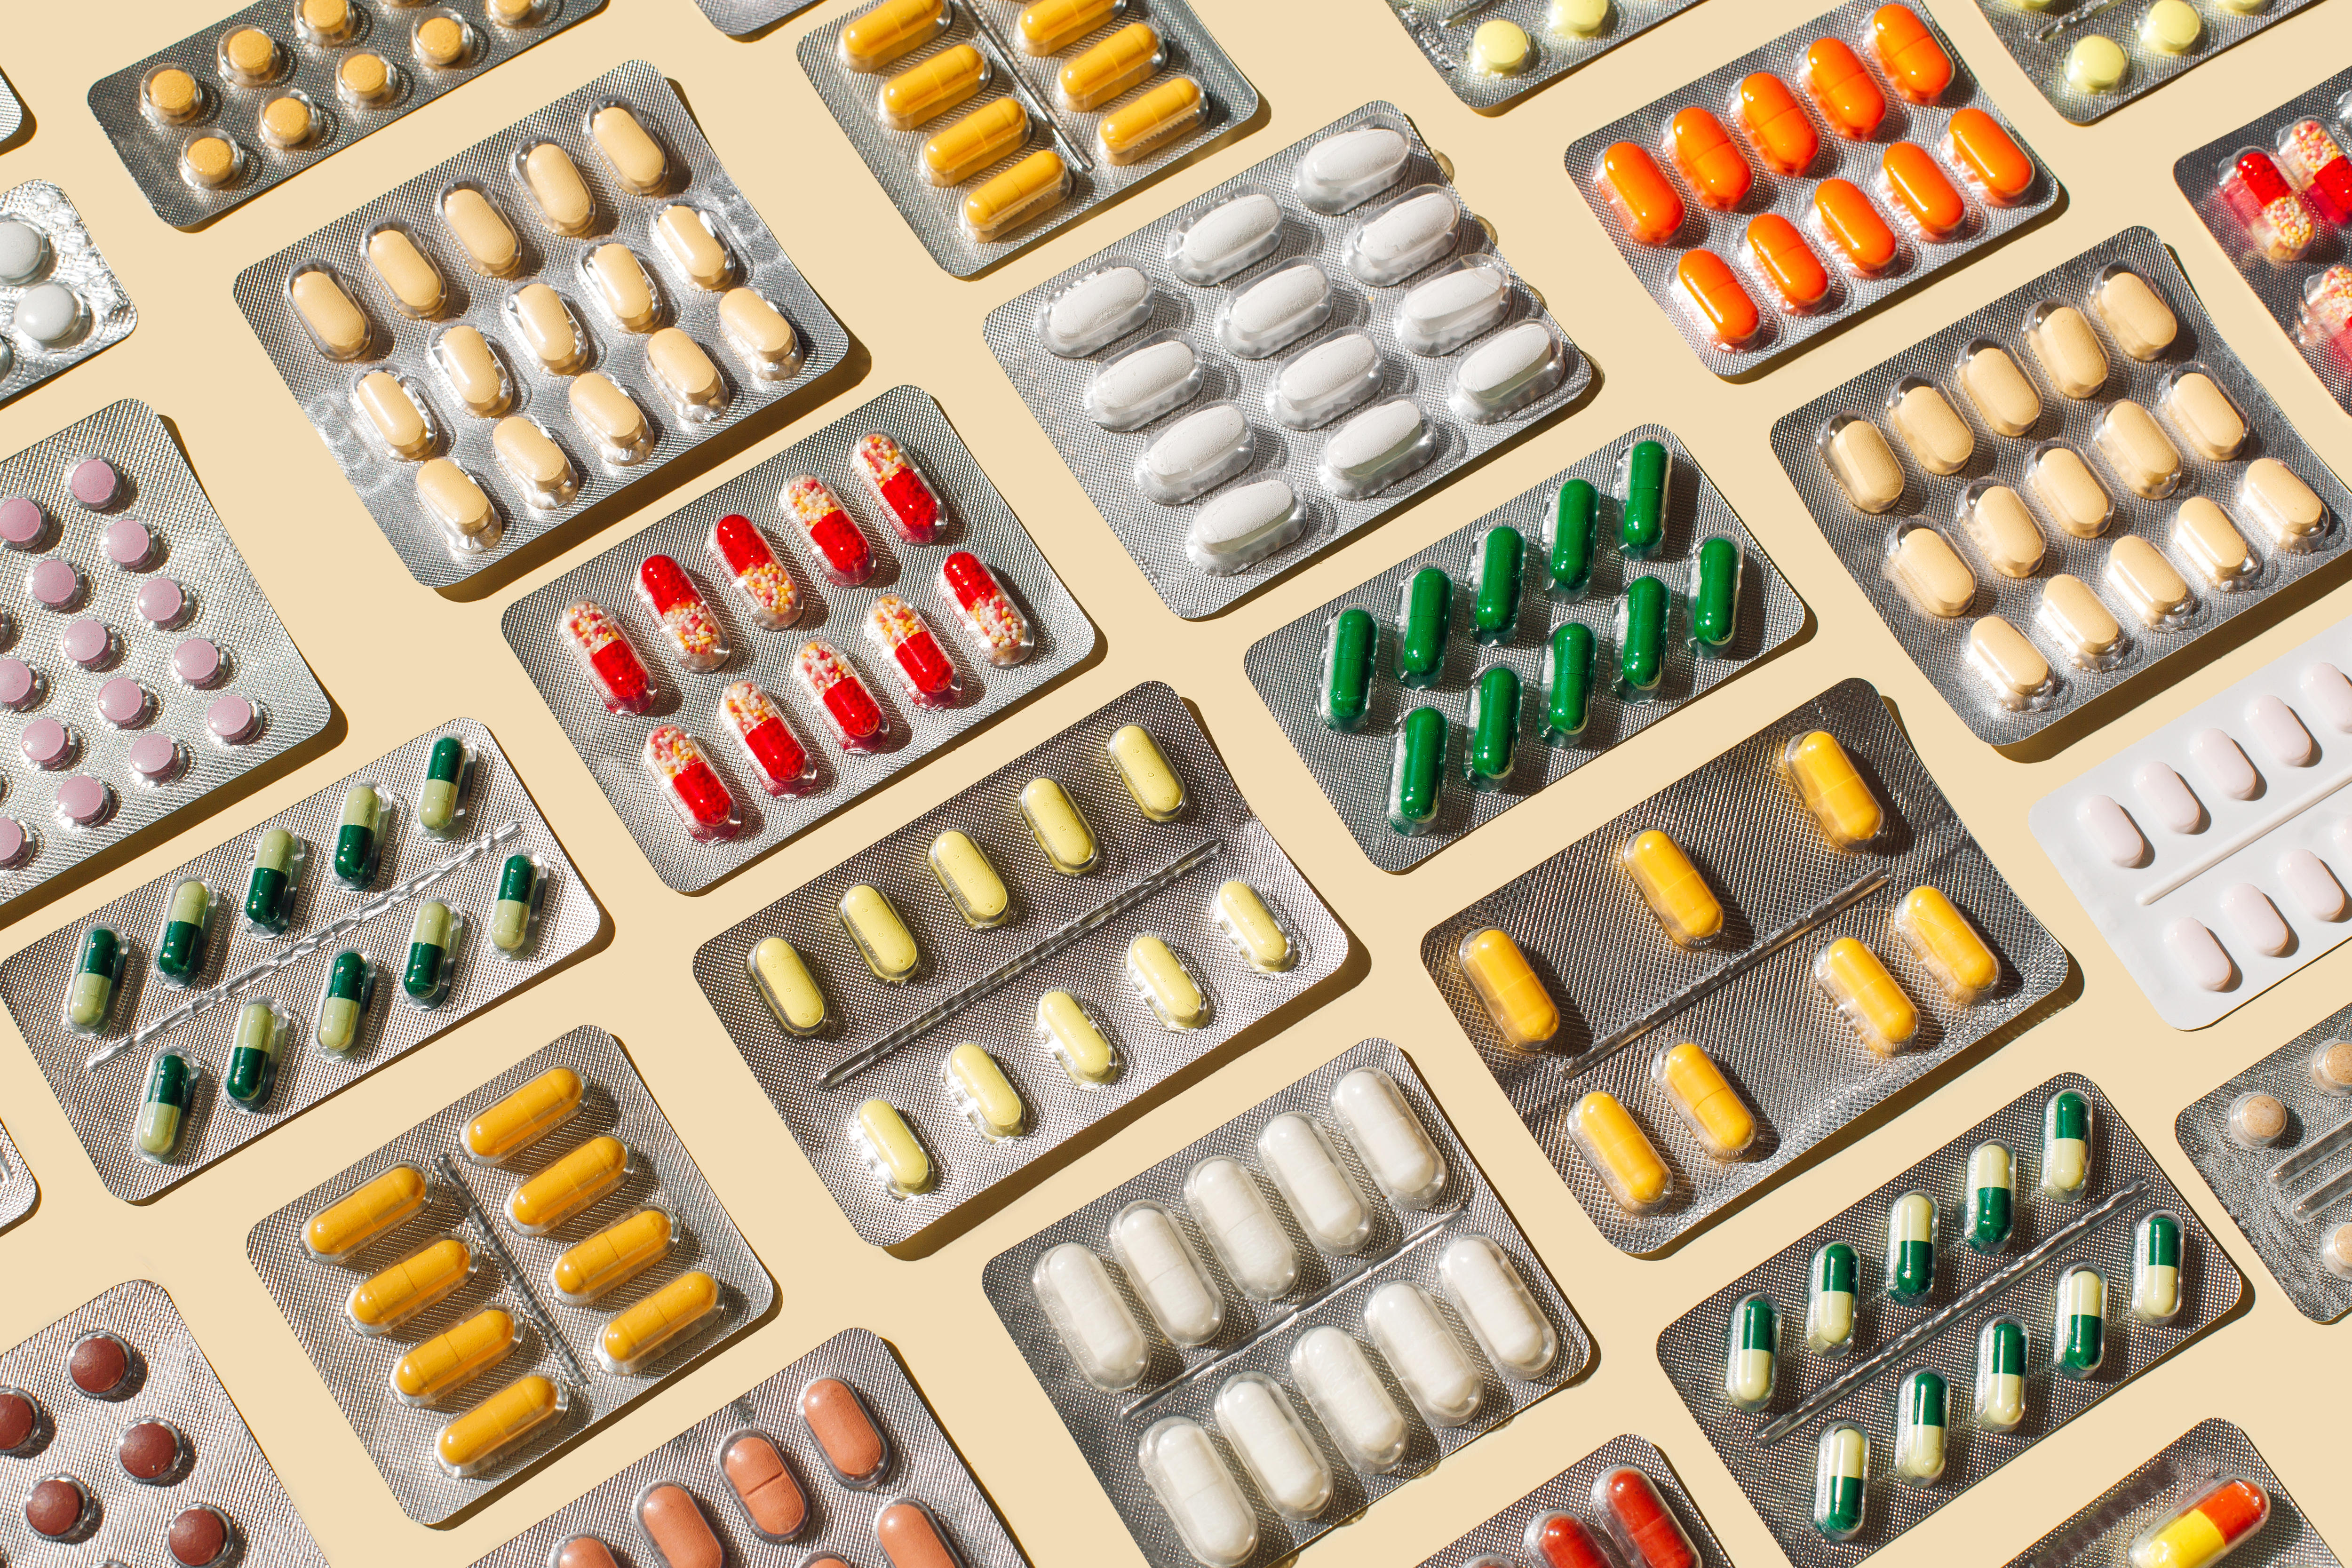 Resistance to antibiotics: how do we address it?